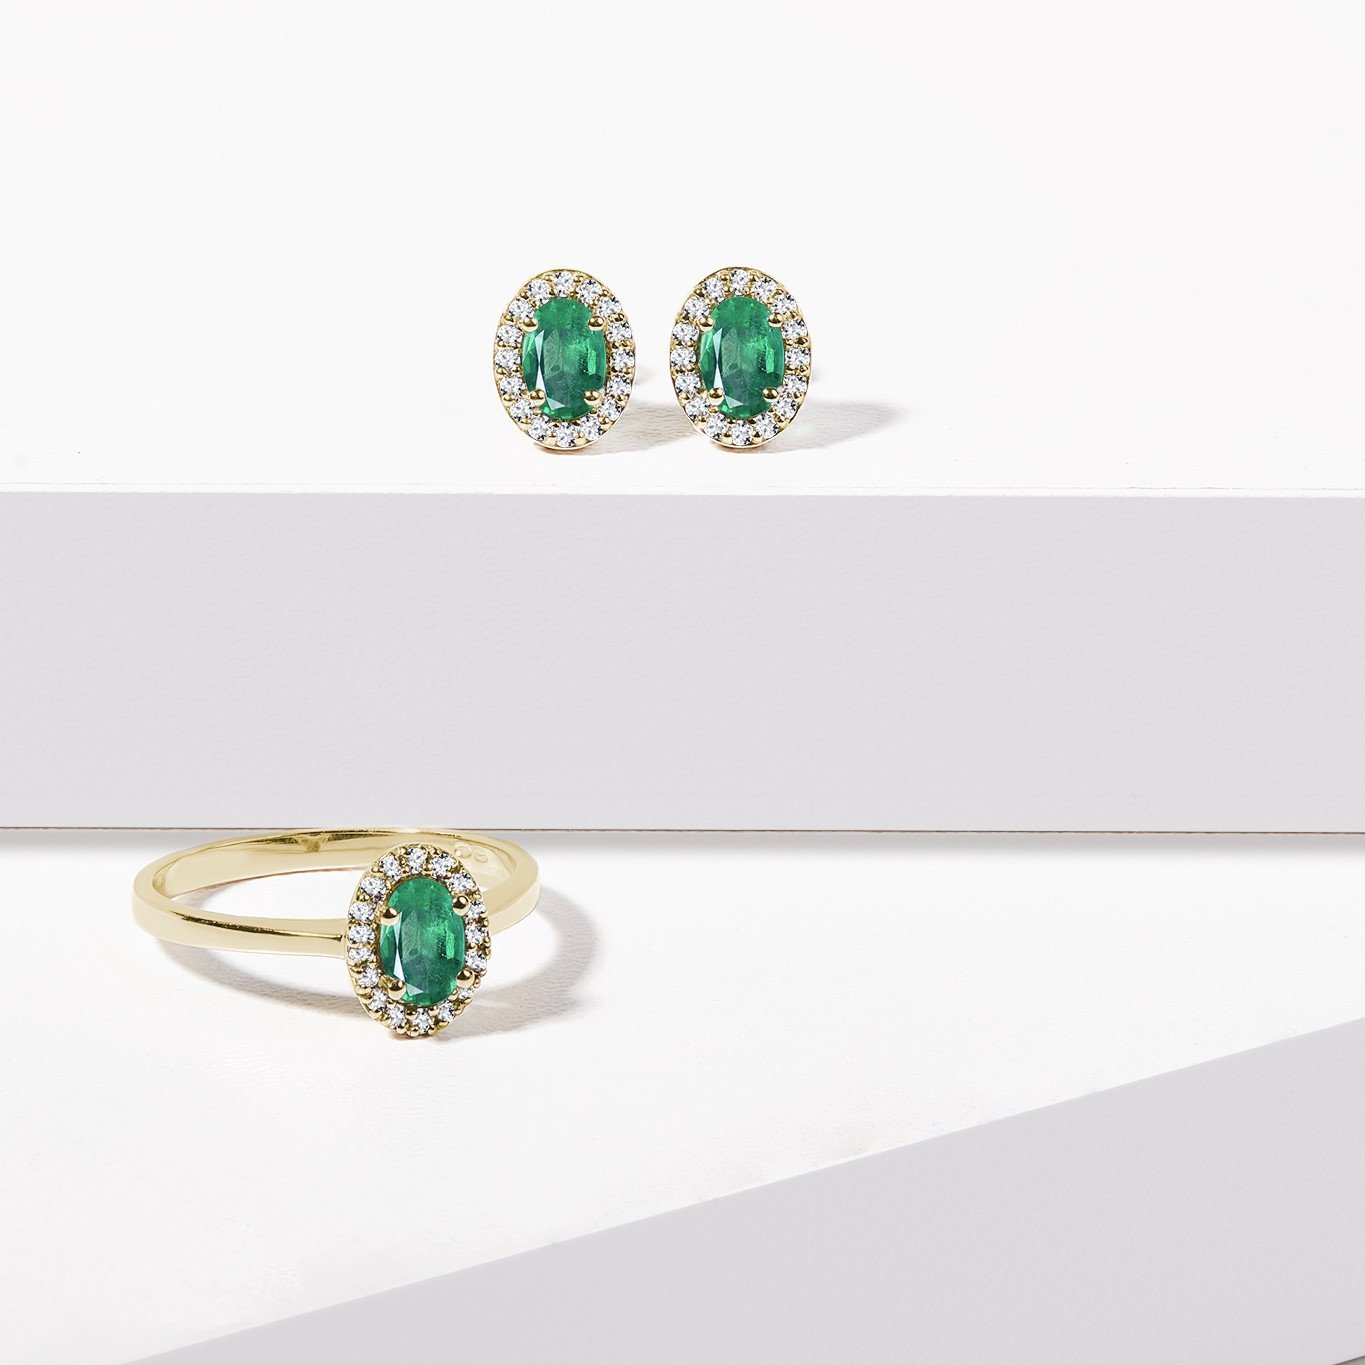 Emerald jewelry